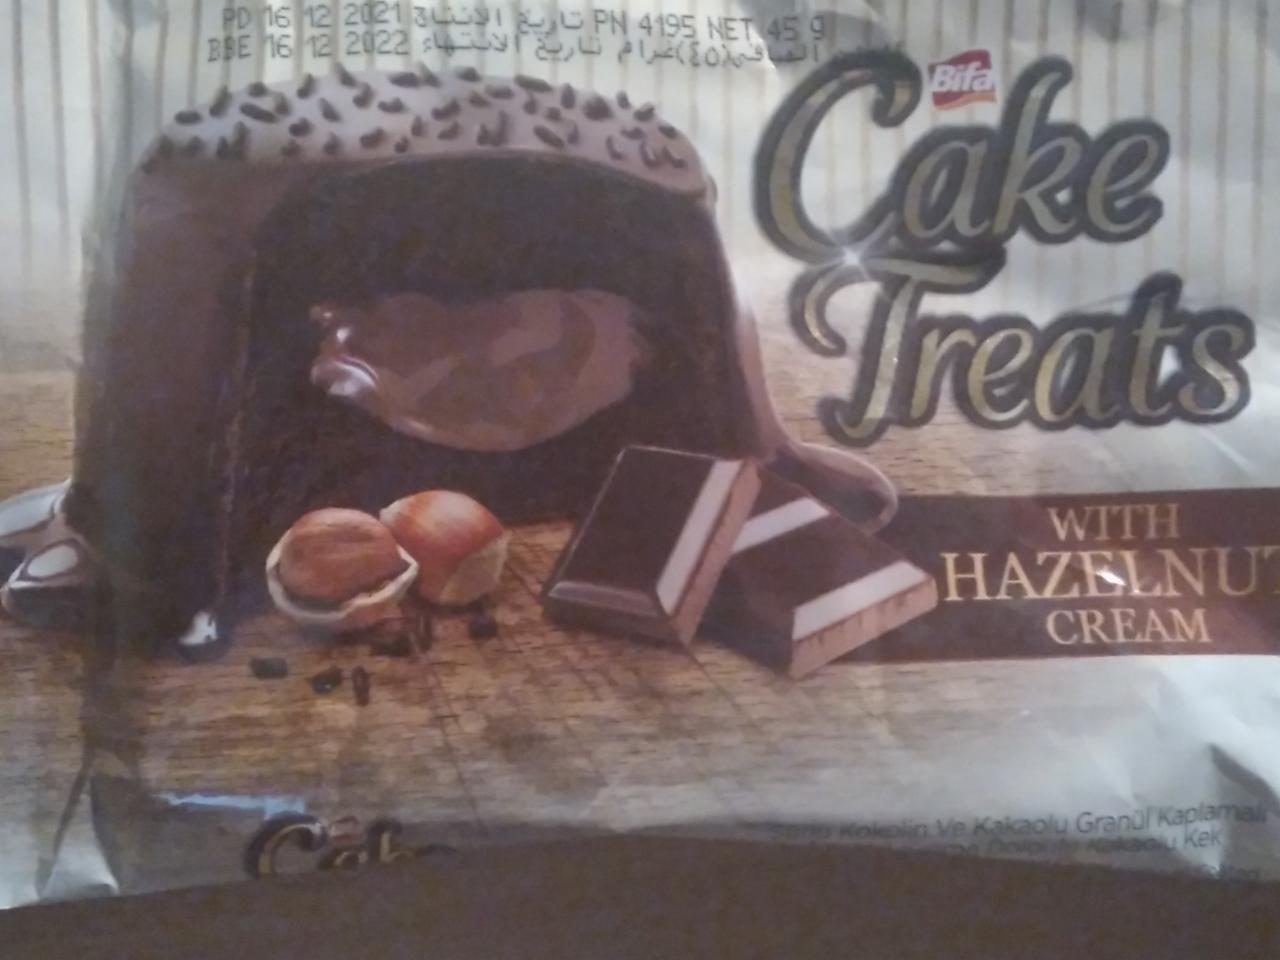 Fotografie - Cake treats hazelnut Bifa